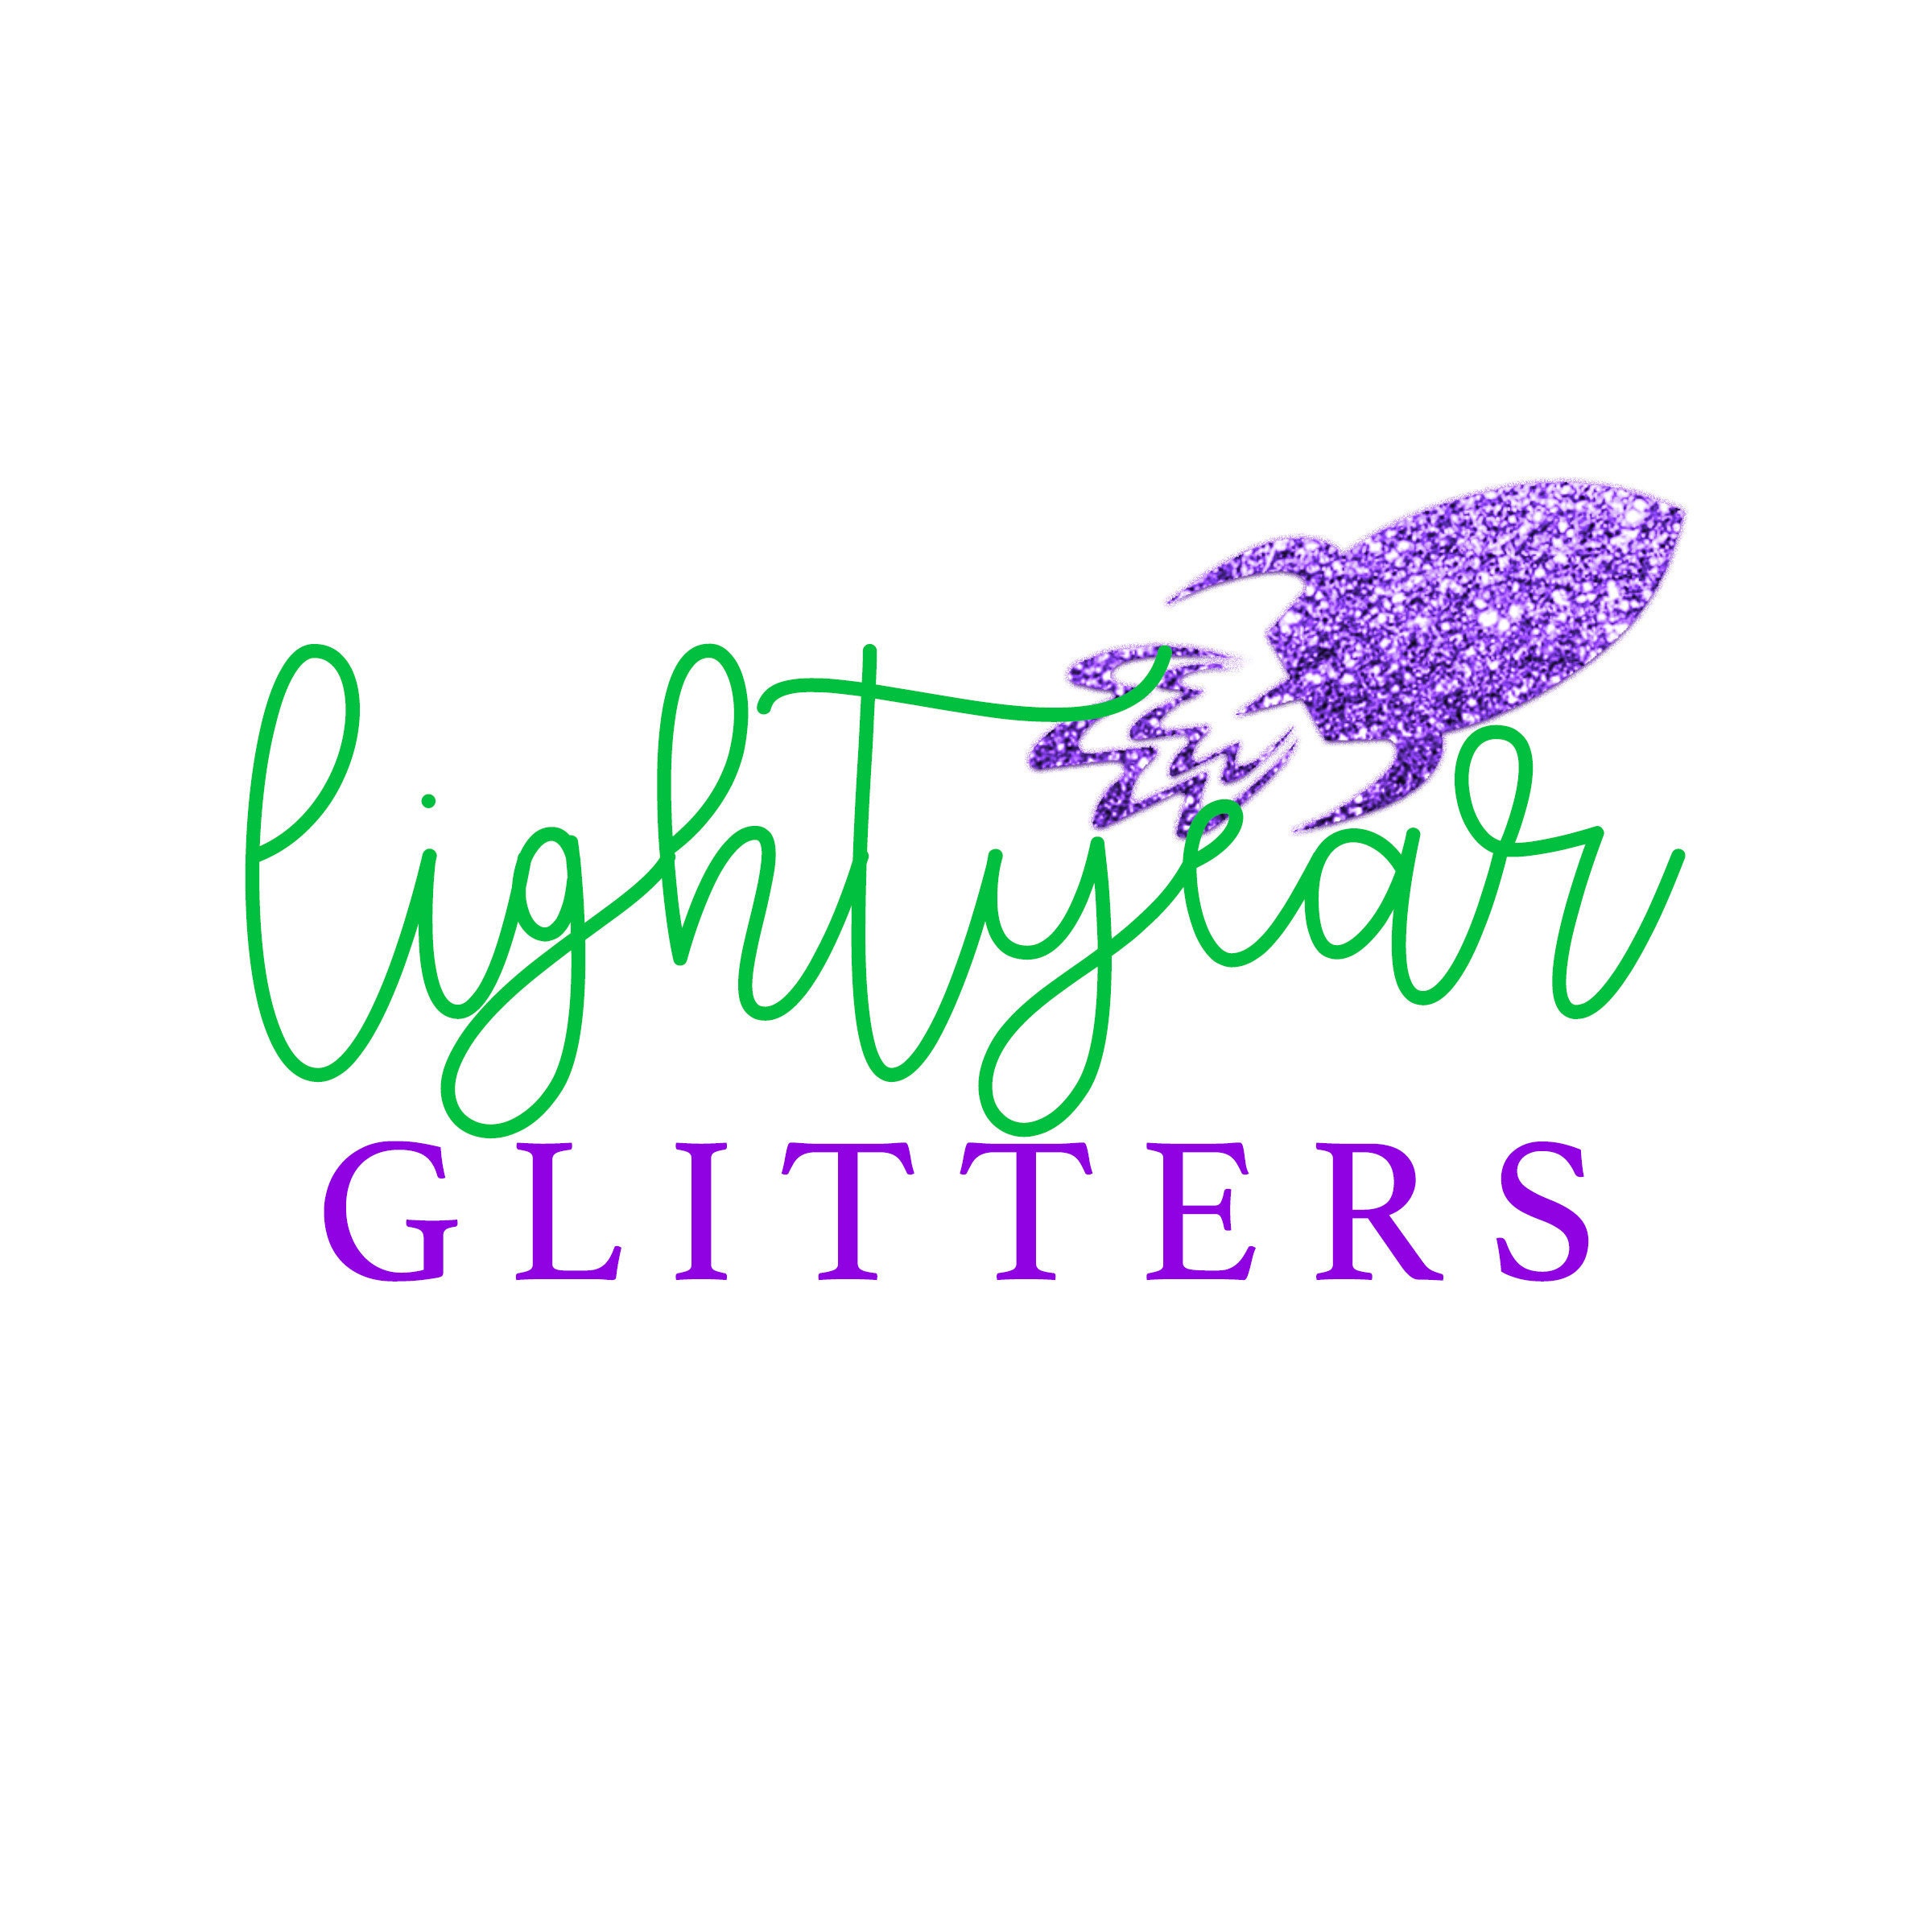 LightyearGlitters - Etsy